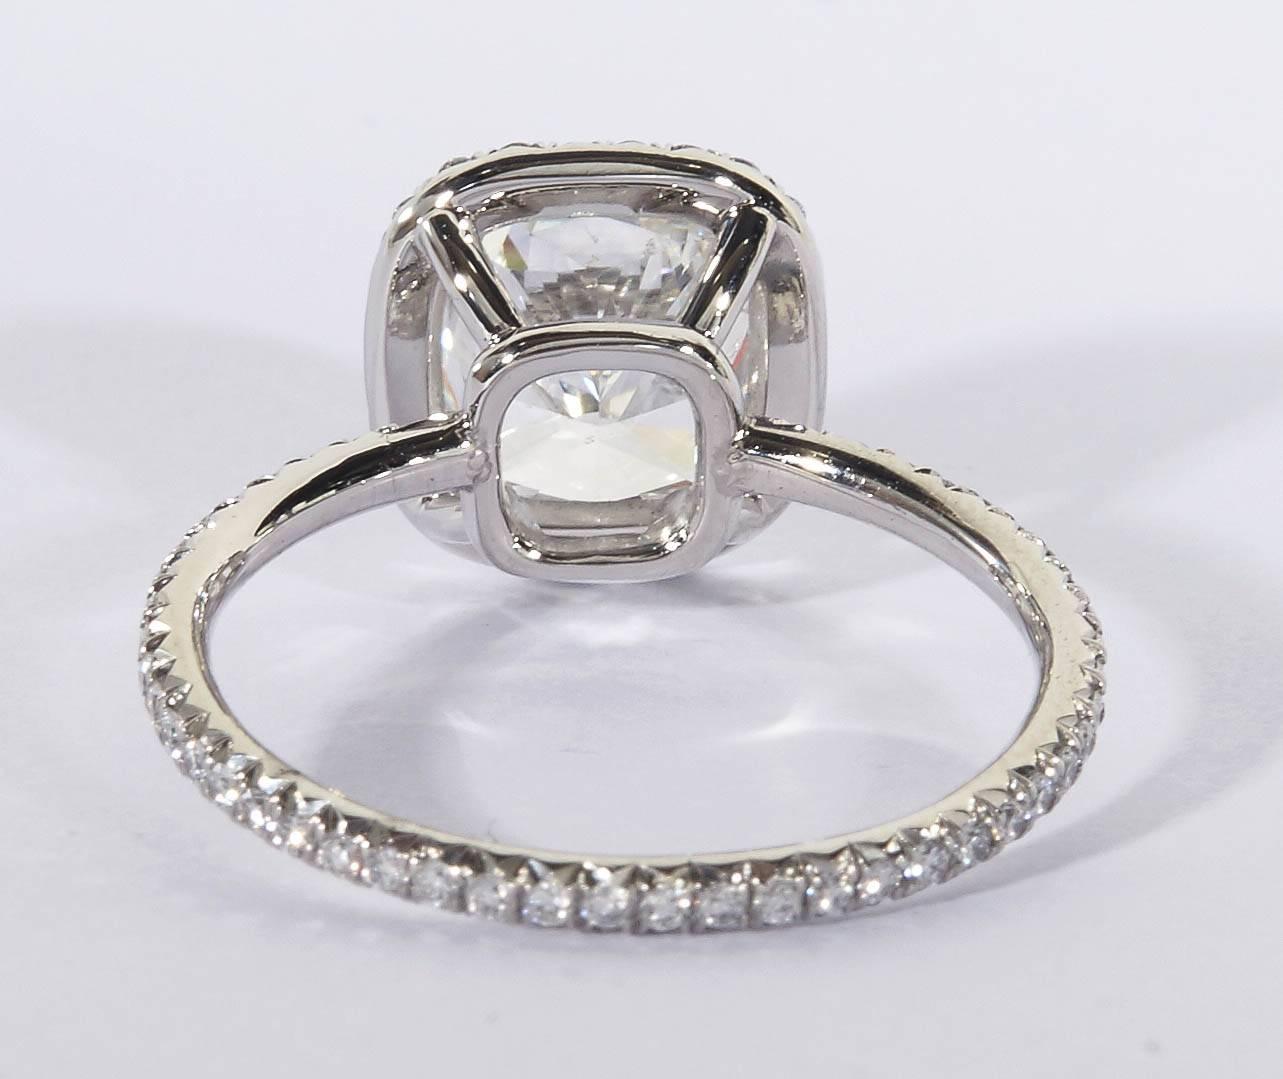 2 carat cushion cut diamond ring on hand